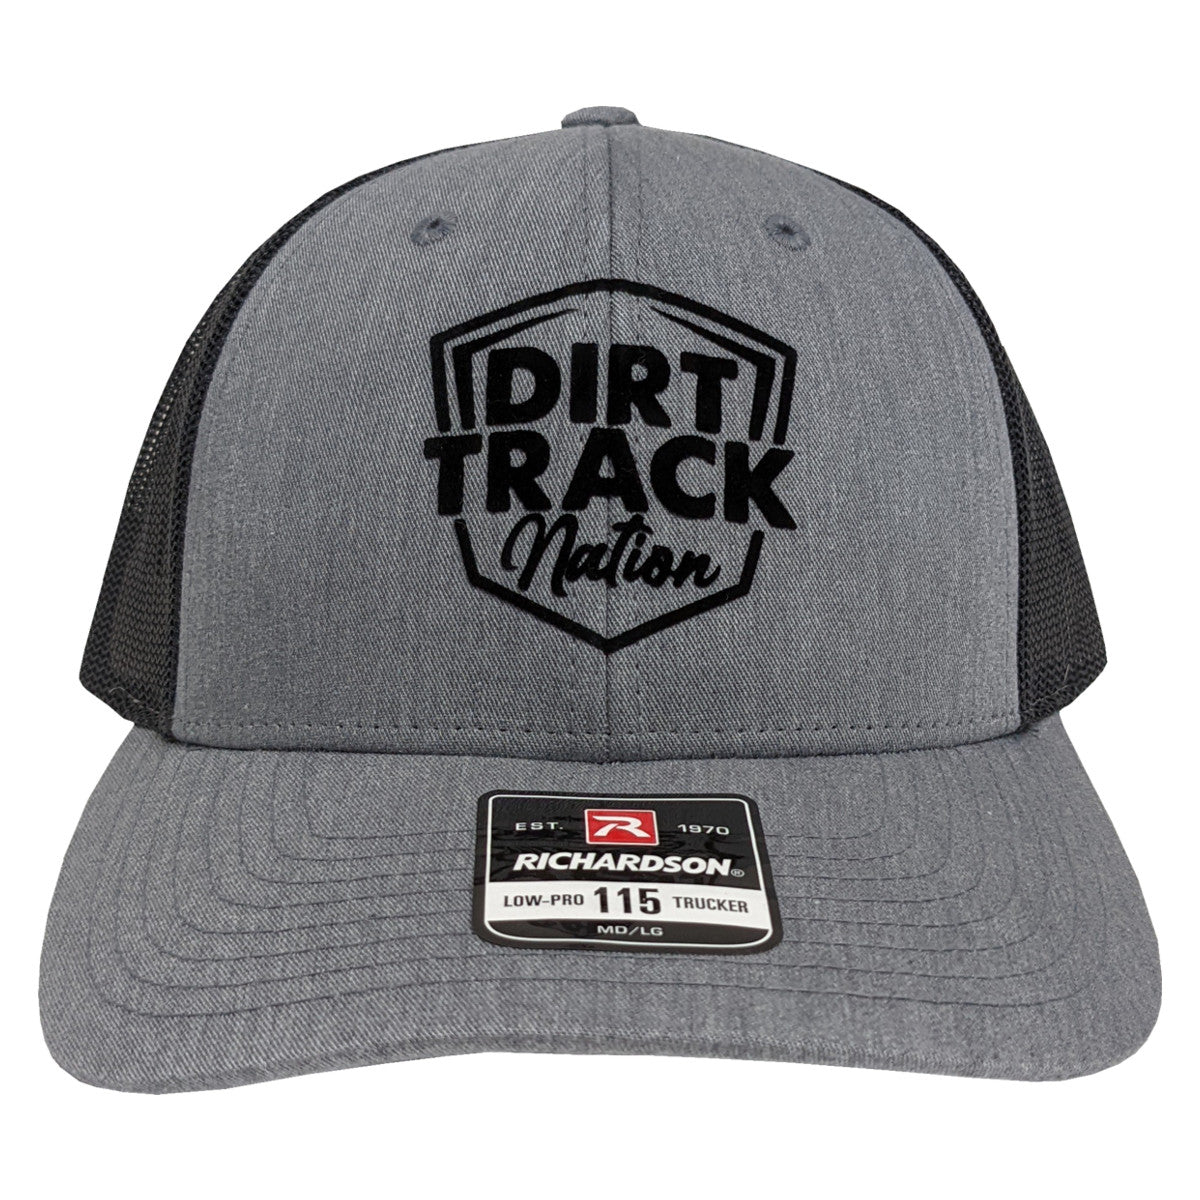 Dirt Track Nation Gray w/ Black Mesh Hat